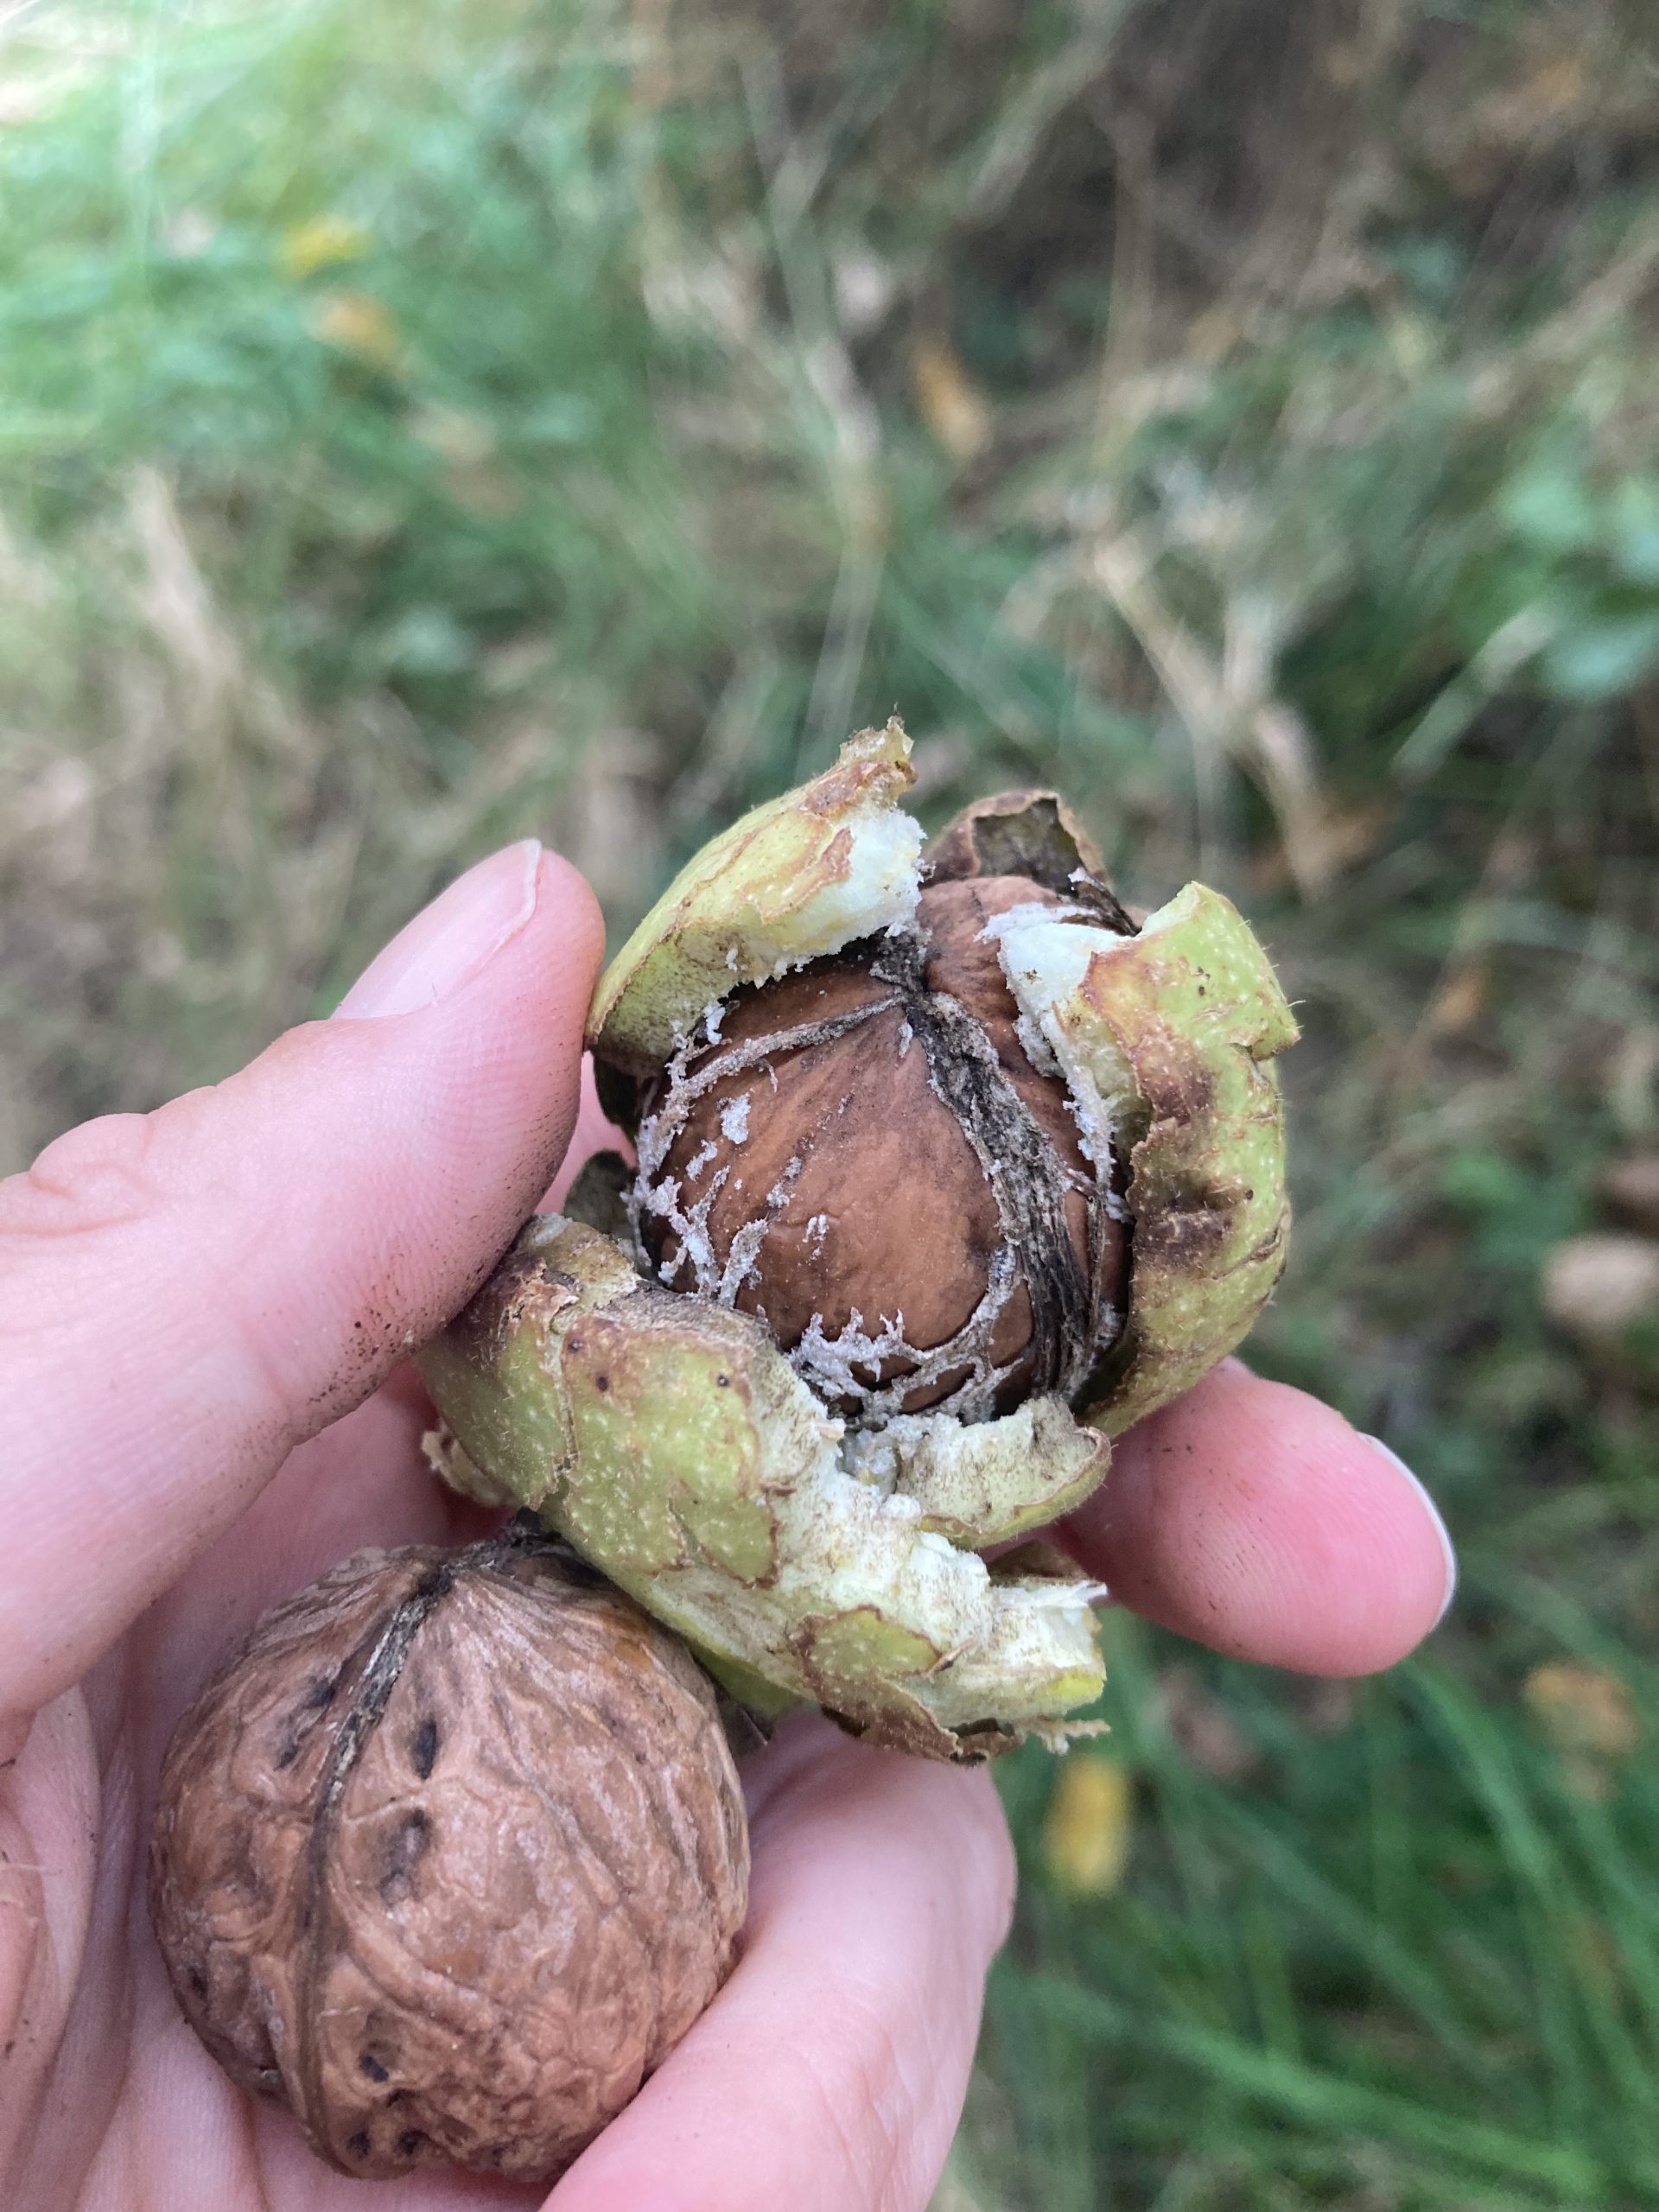 Holding walnuts